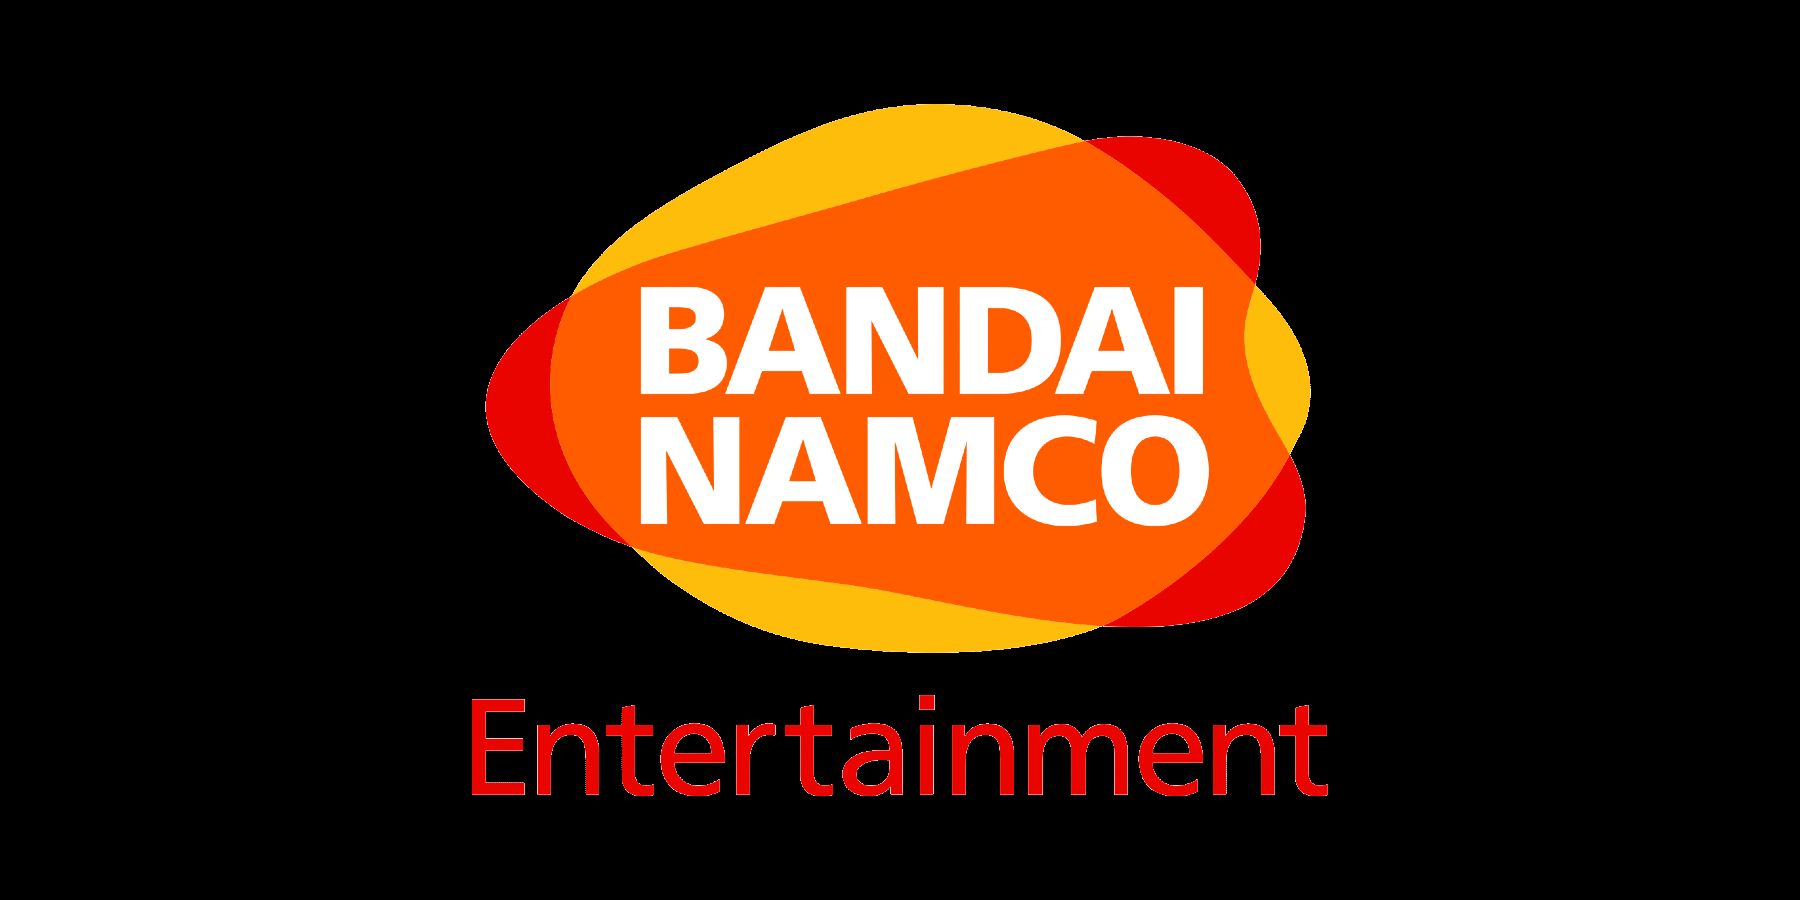 Bandai Namco има ново лого